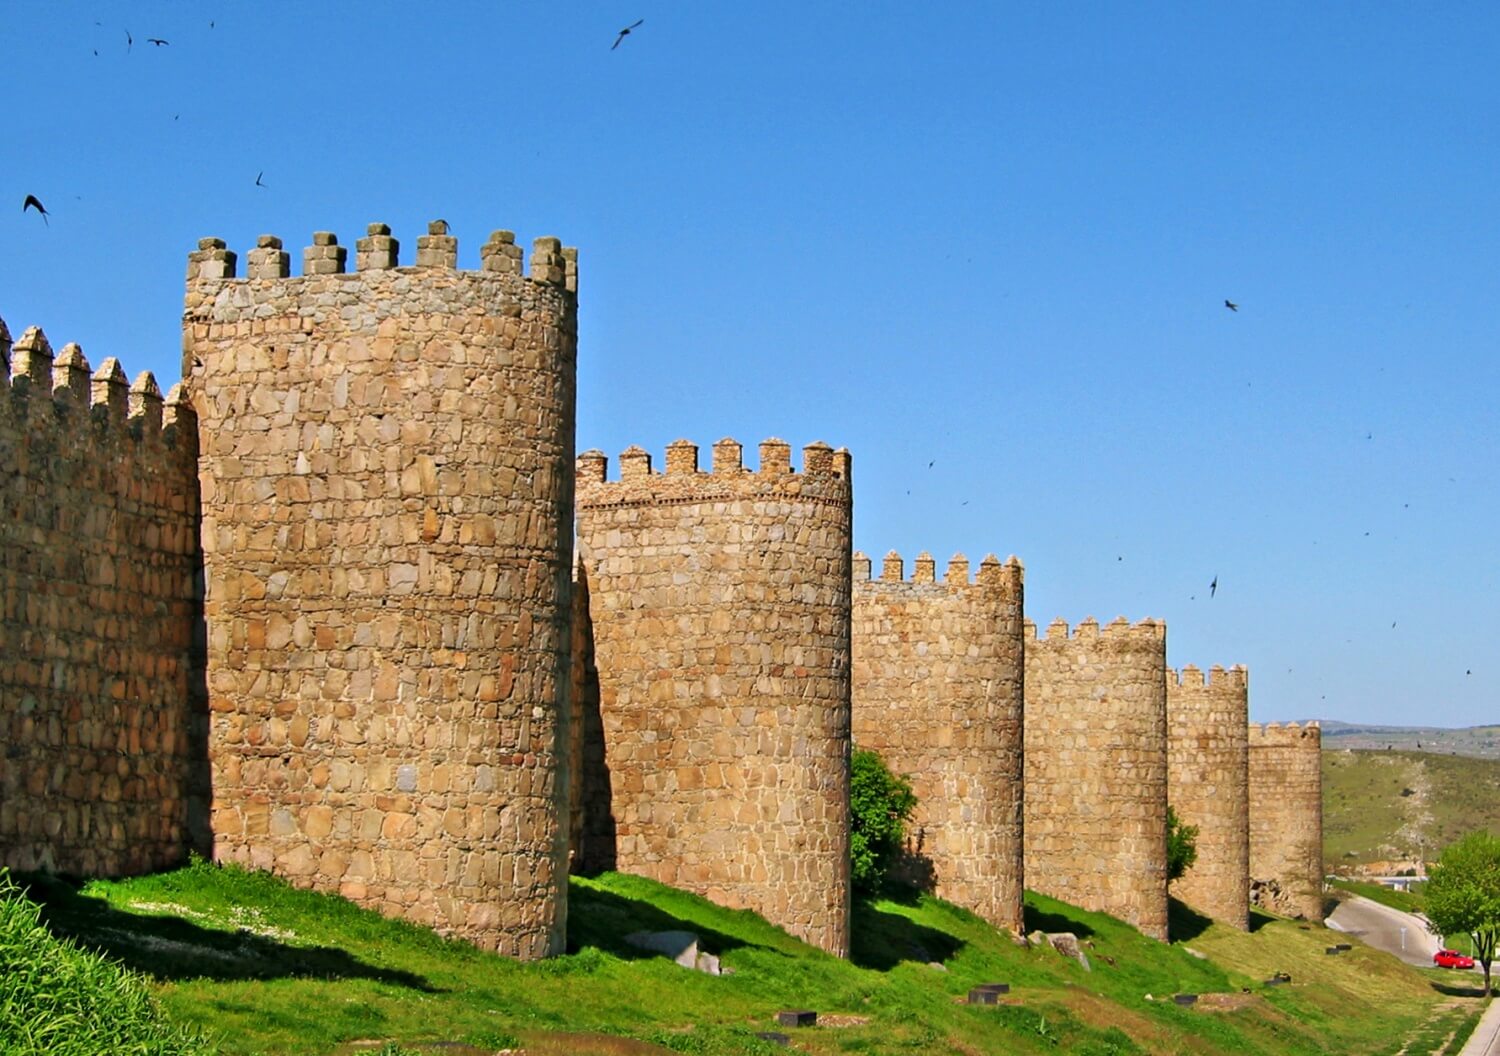 Walls of Ávila